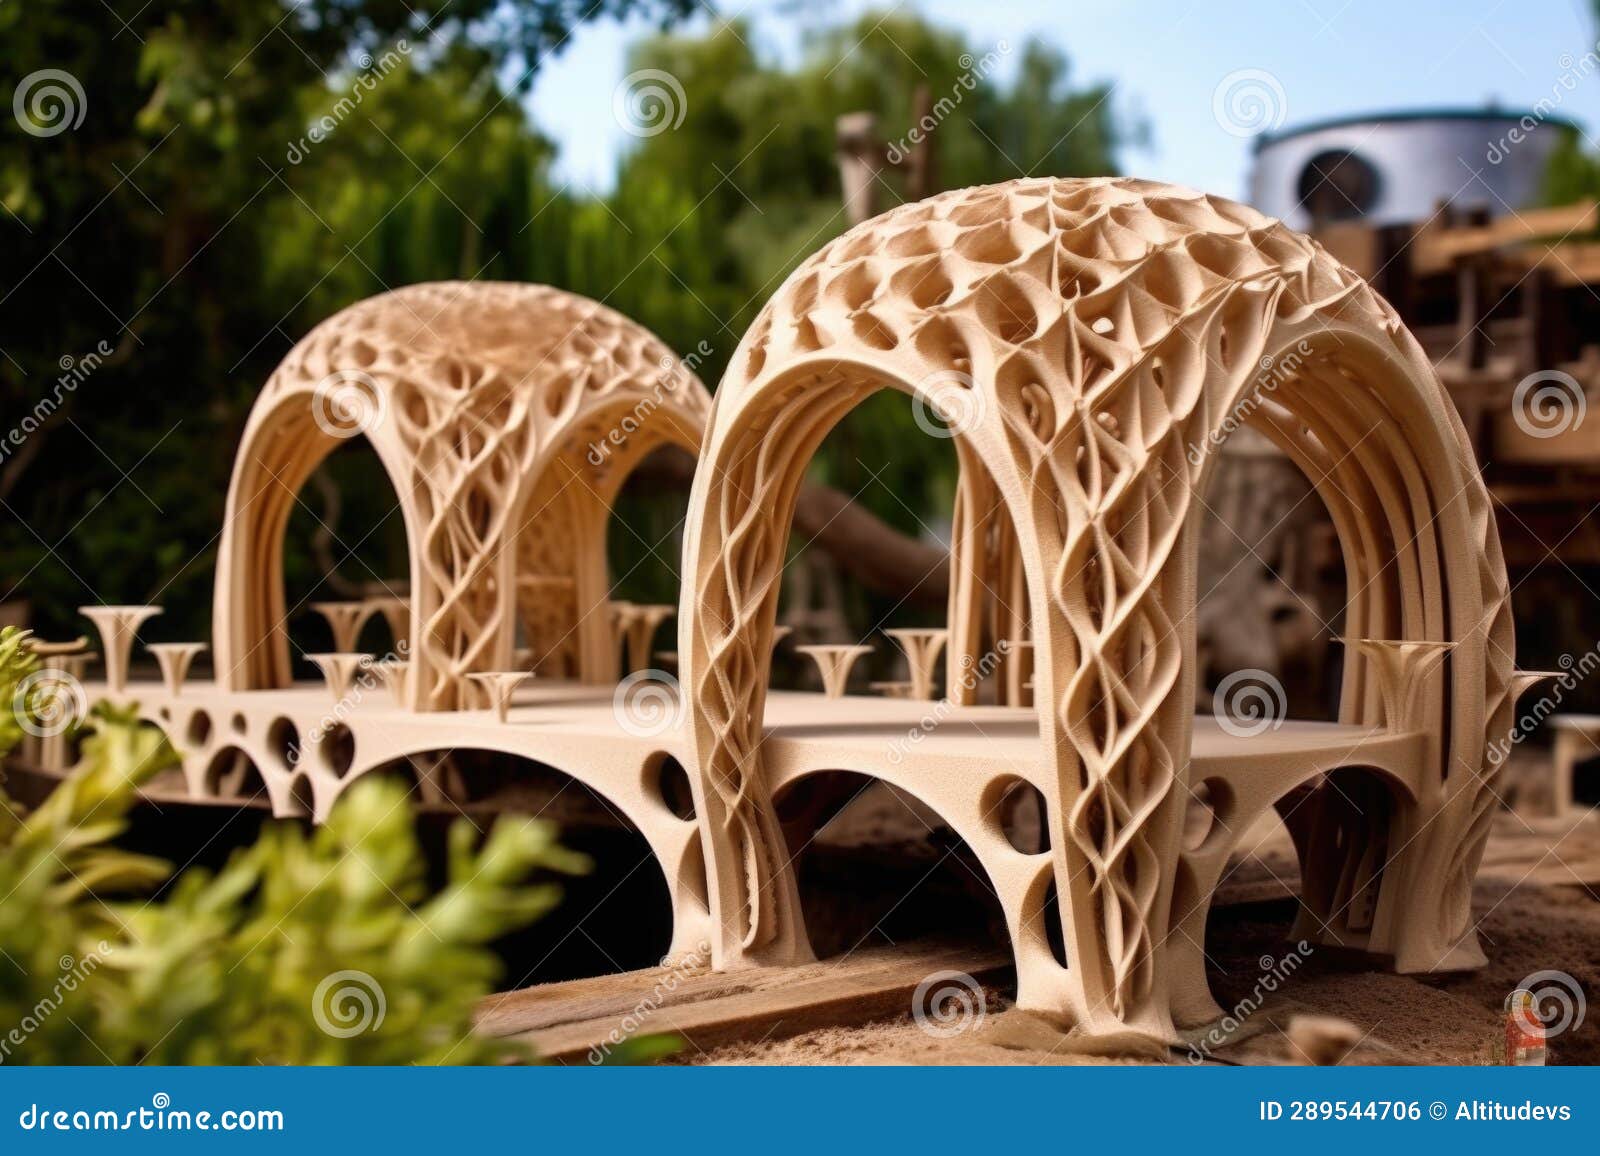 4d printed eco-friendly construction materials